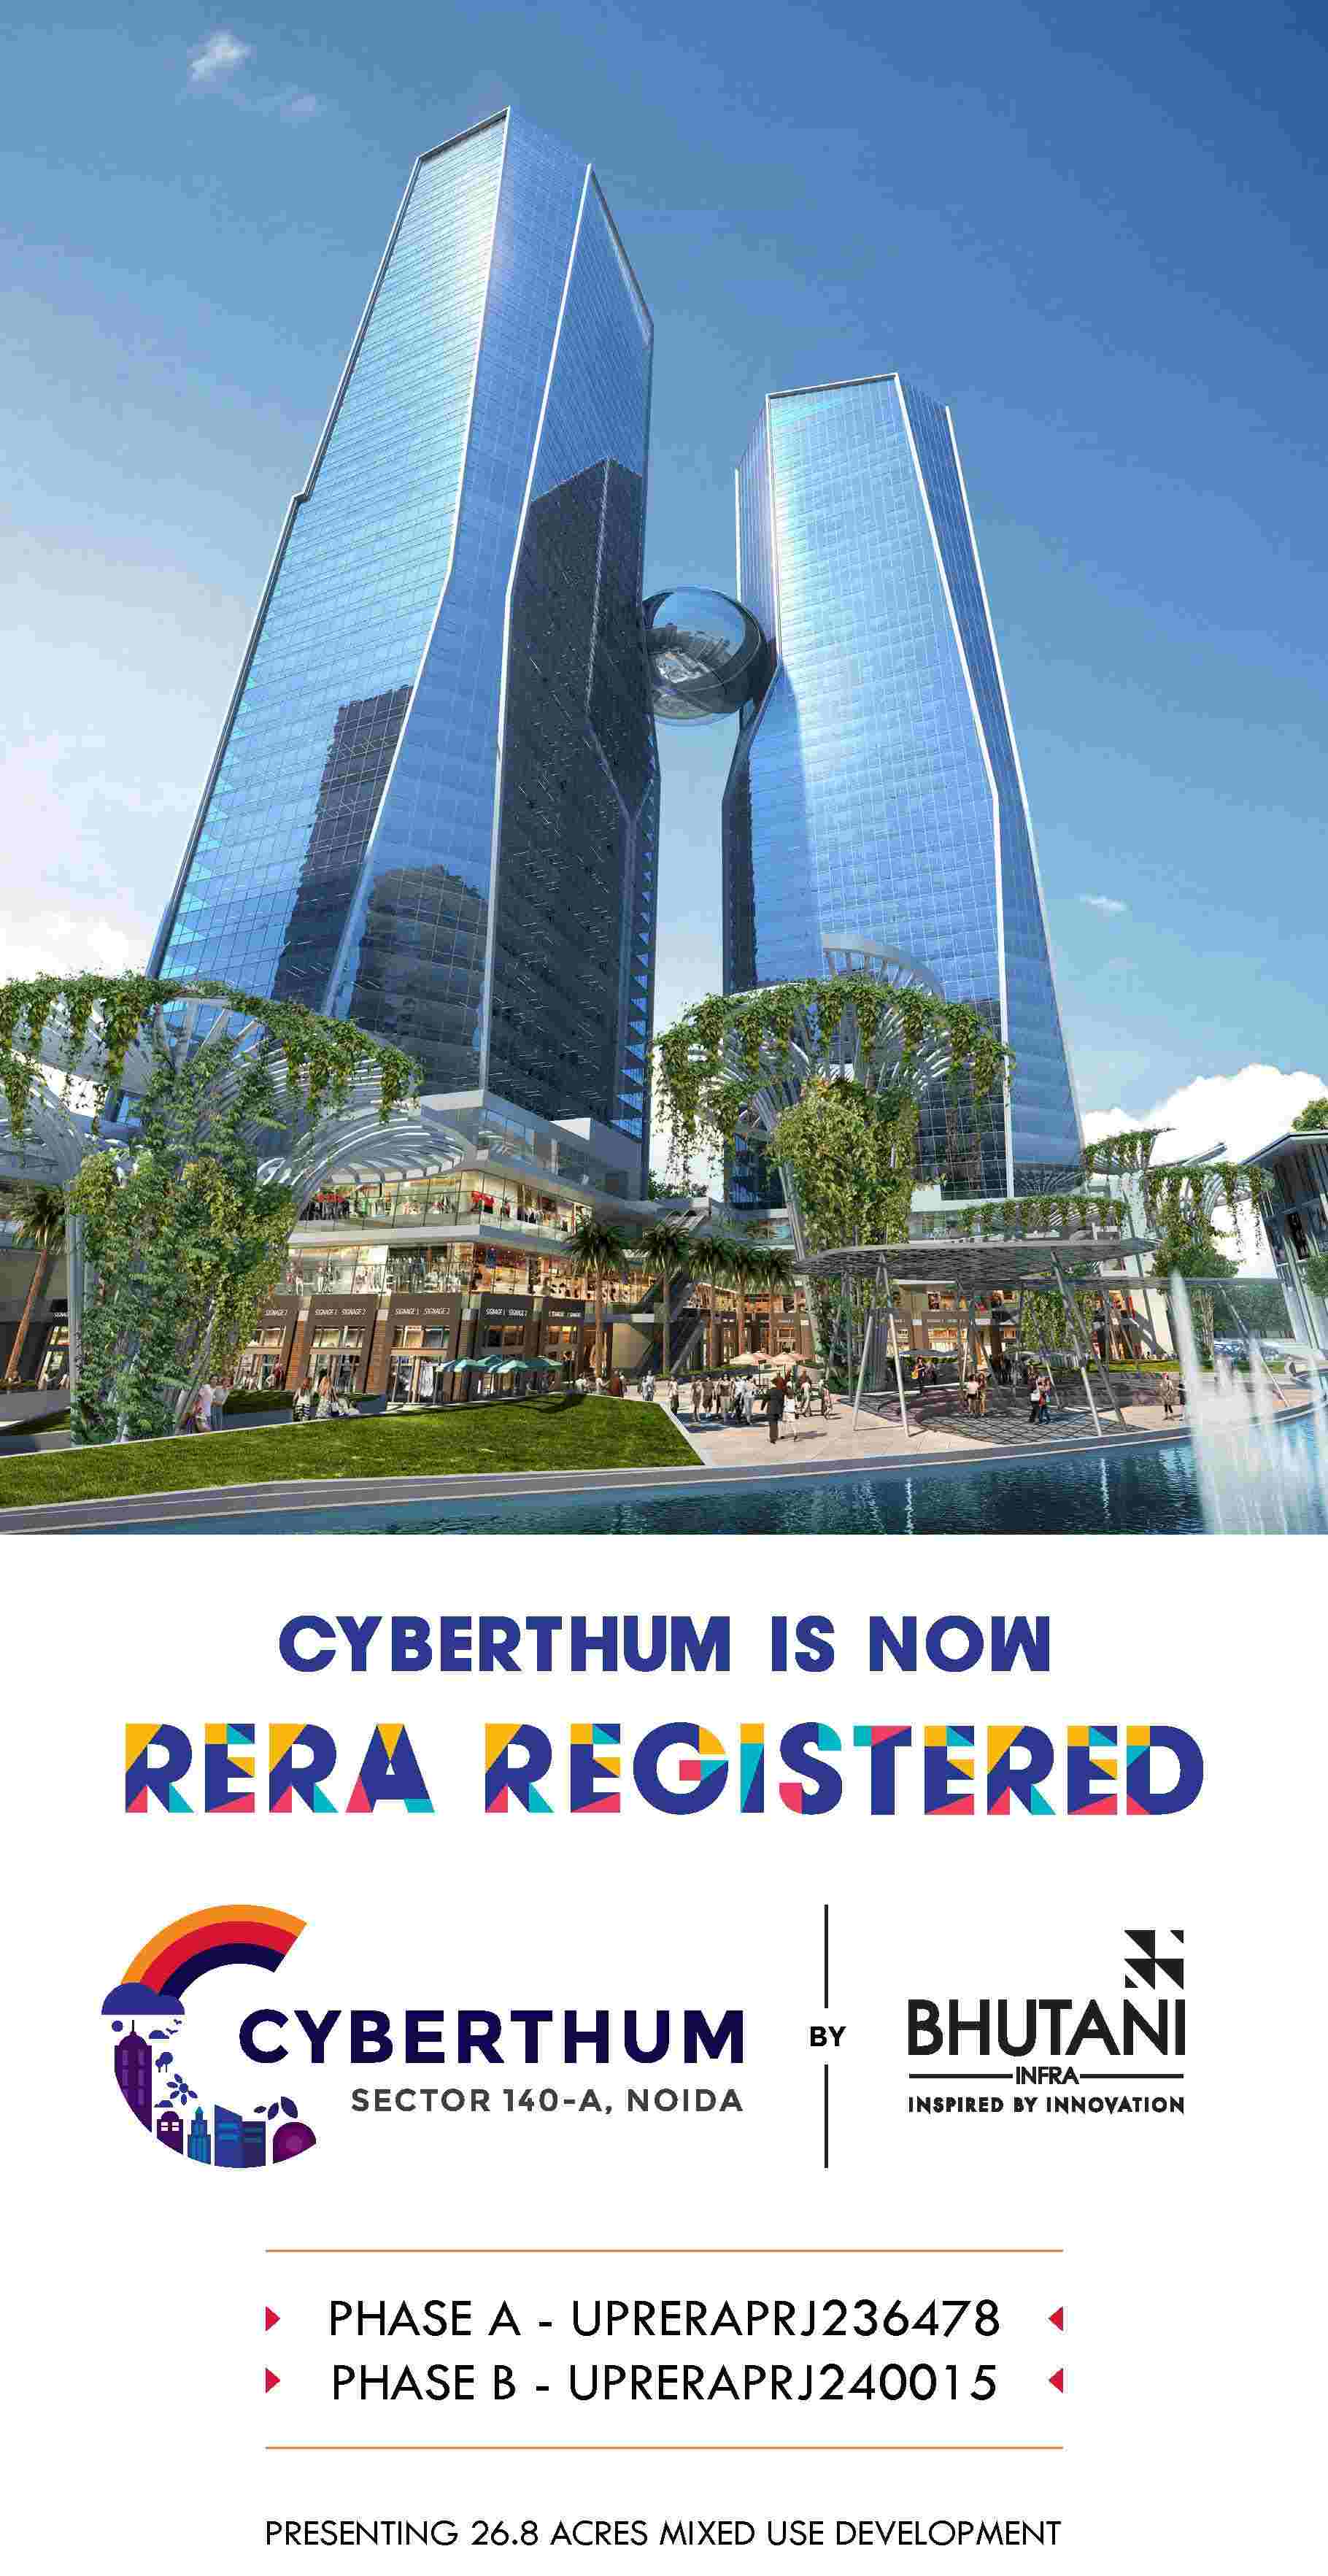 Bhutani Cyberthum is now RERA Registered, Noida